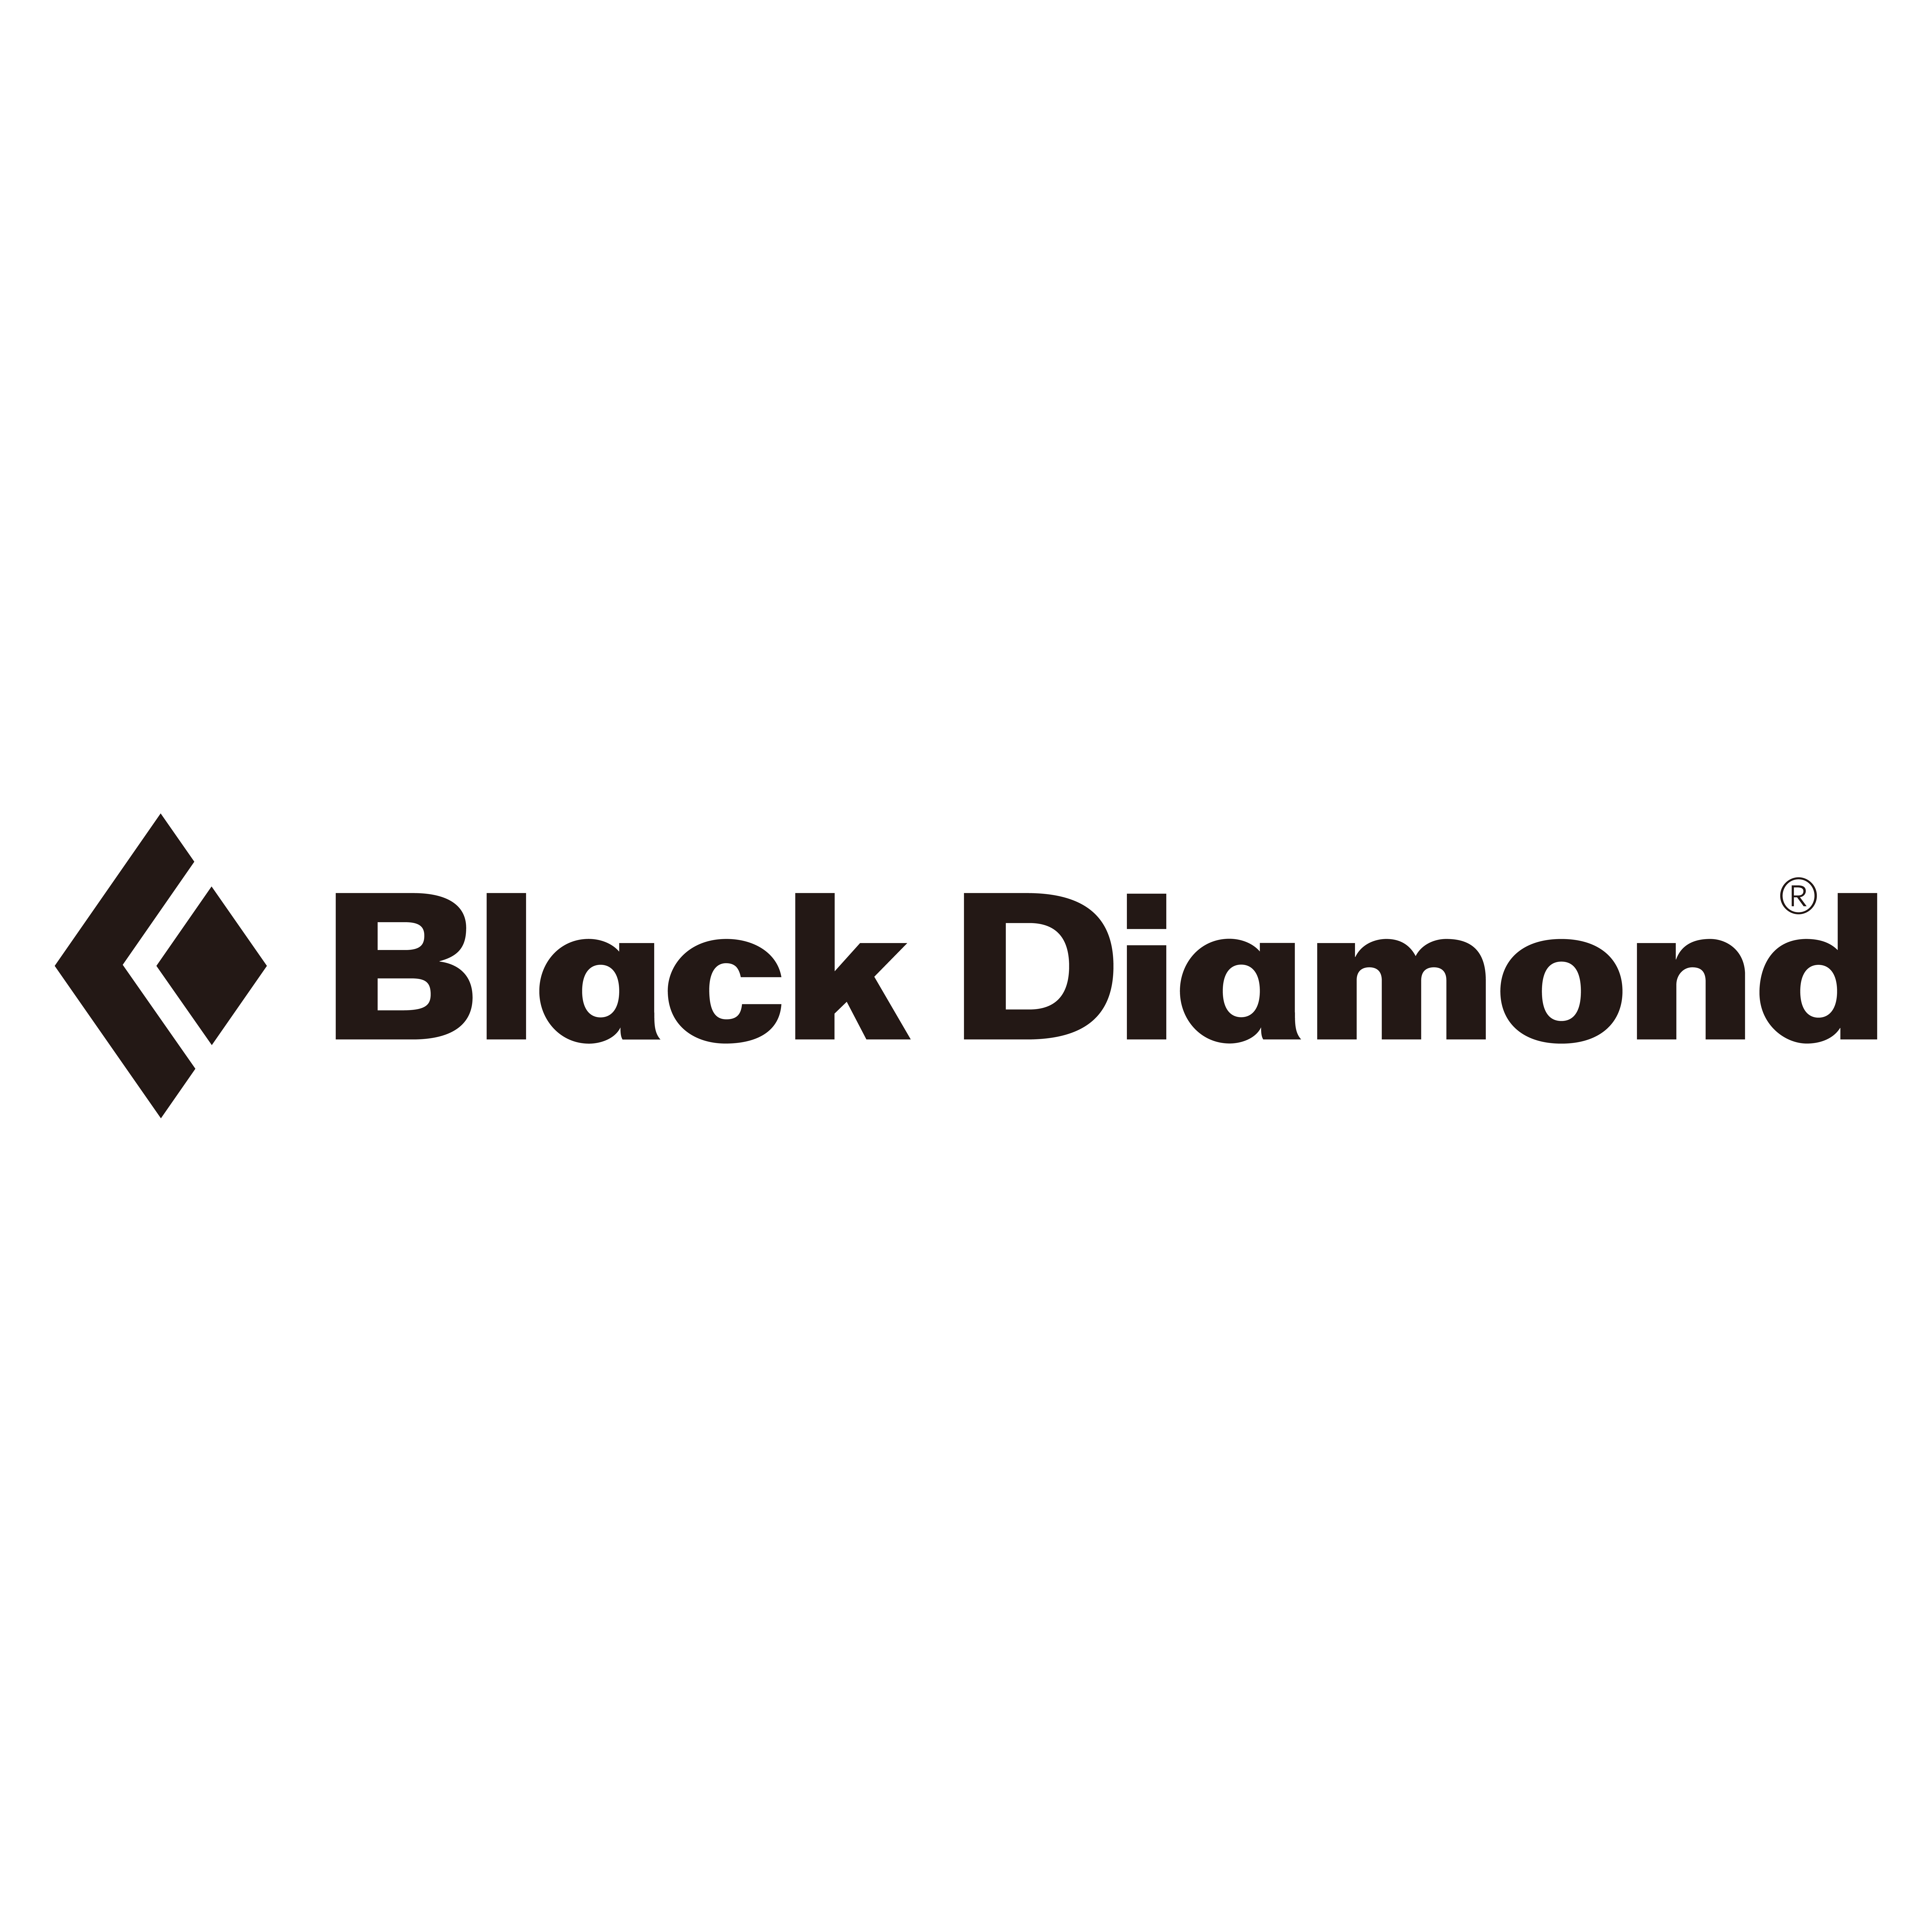 Black Diamond - Gears Brands